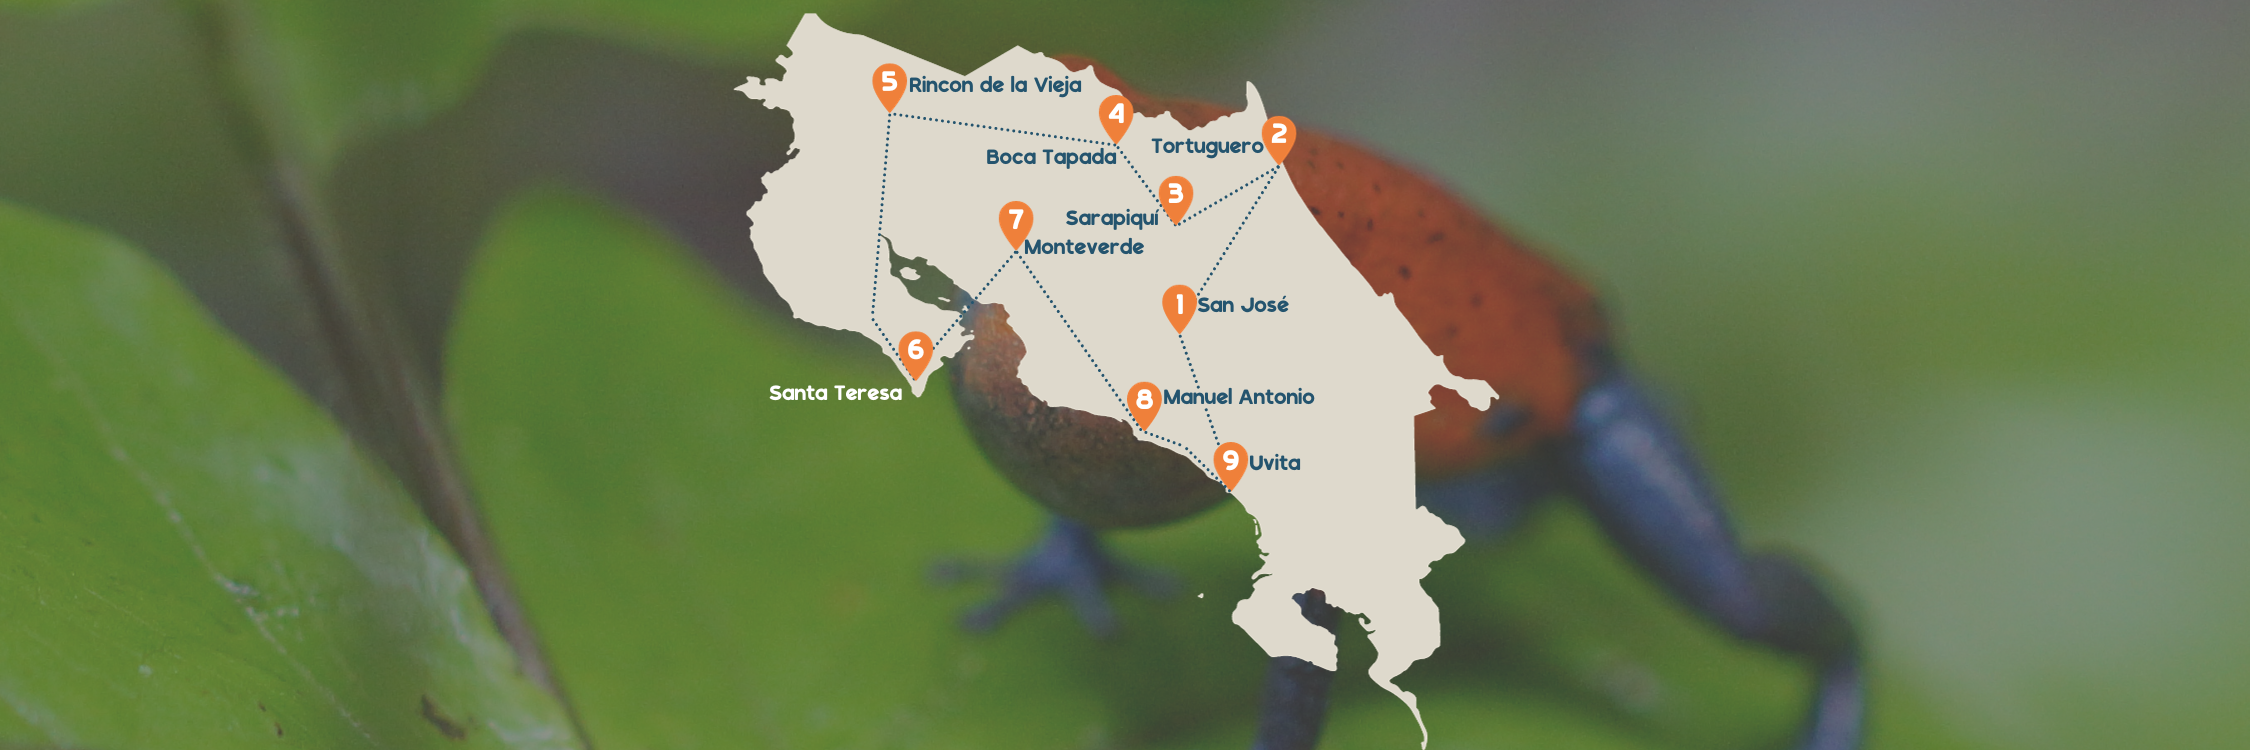 Costa Rica rondreis routekaart